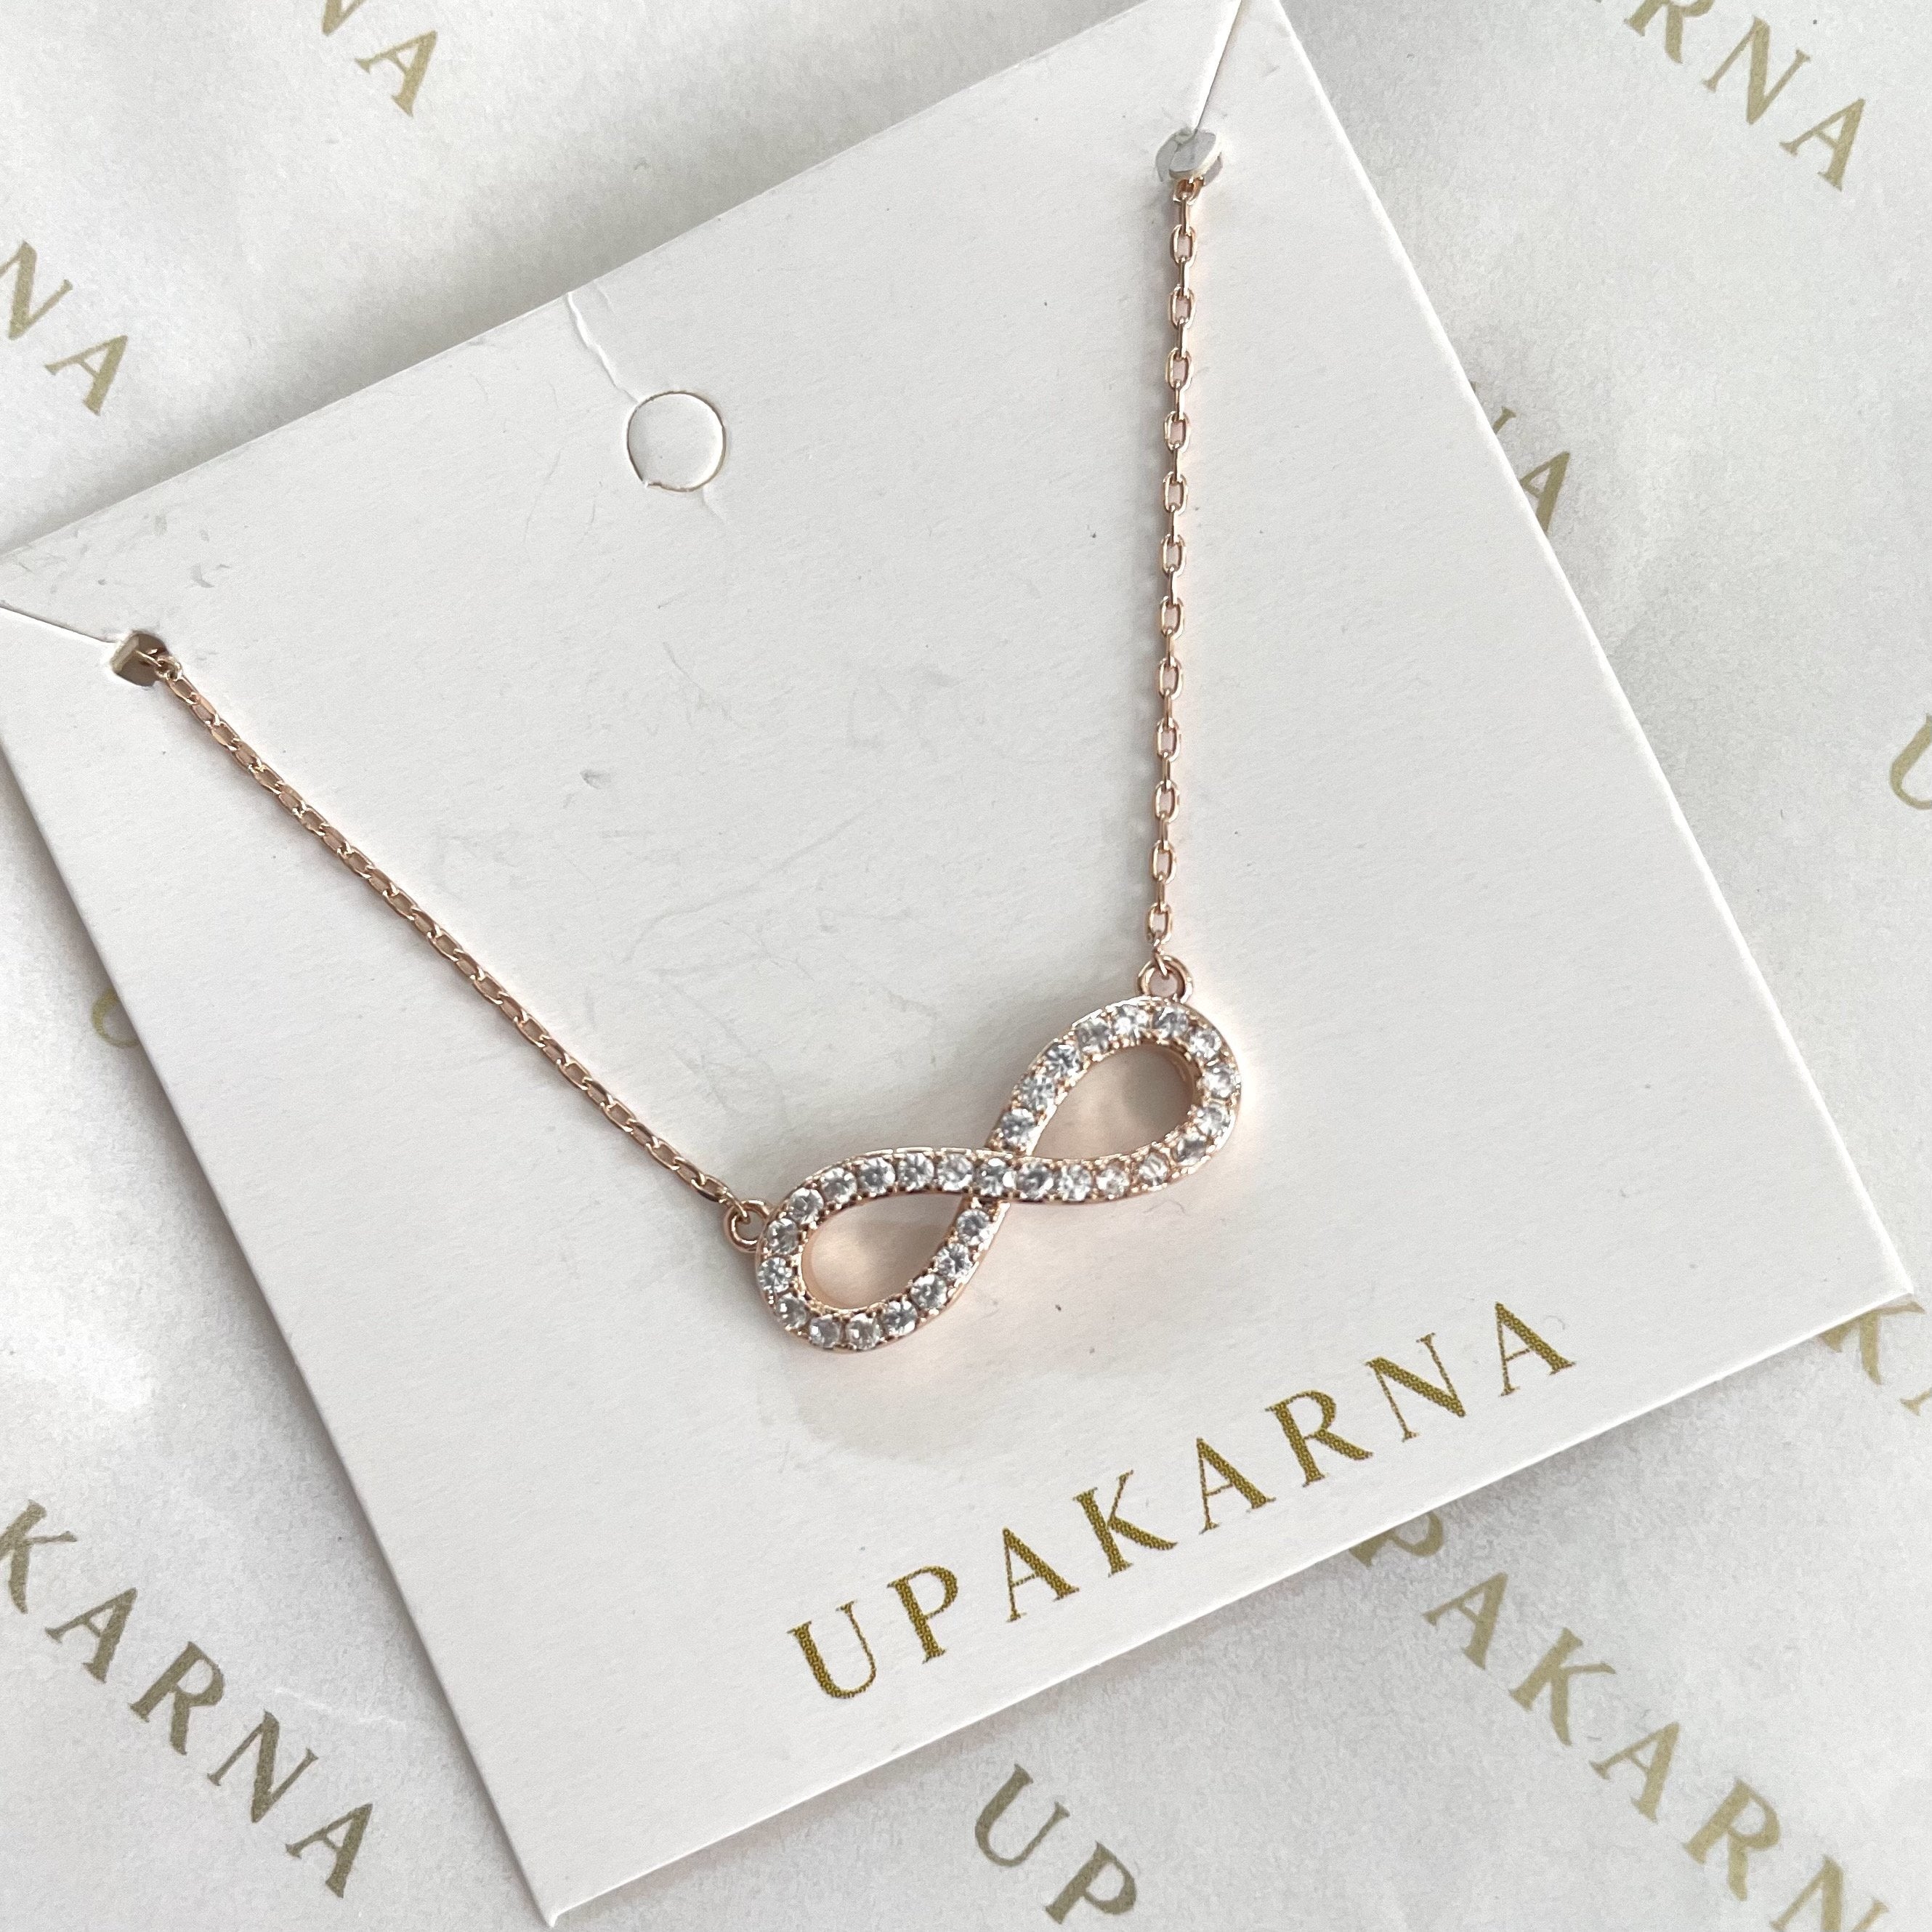 The Infinity Necklace - Upakarna Jewelry